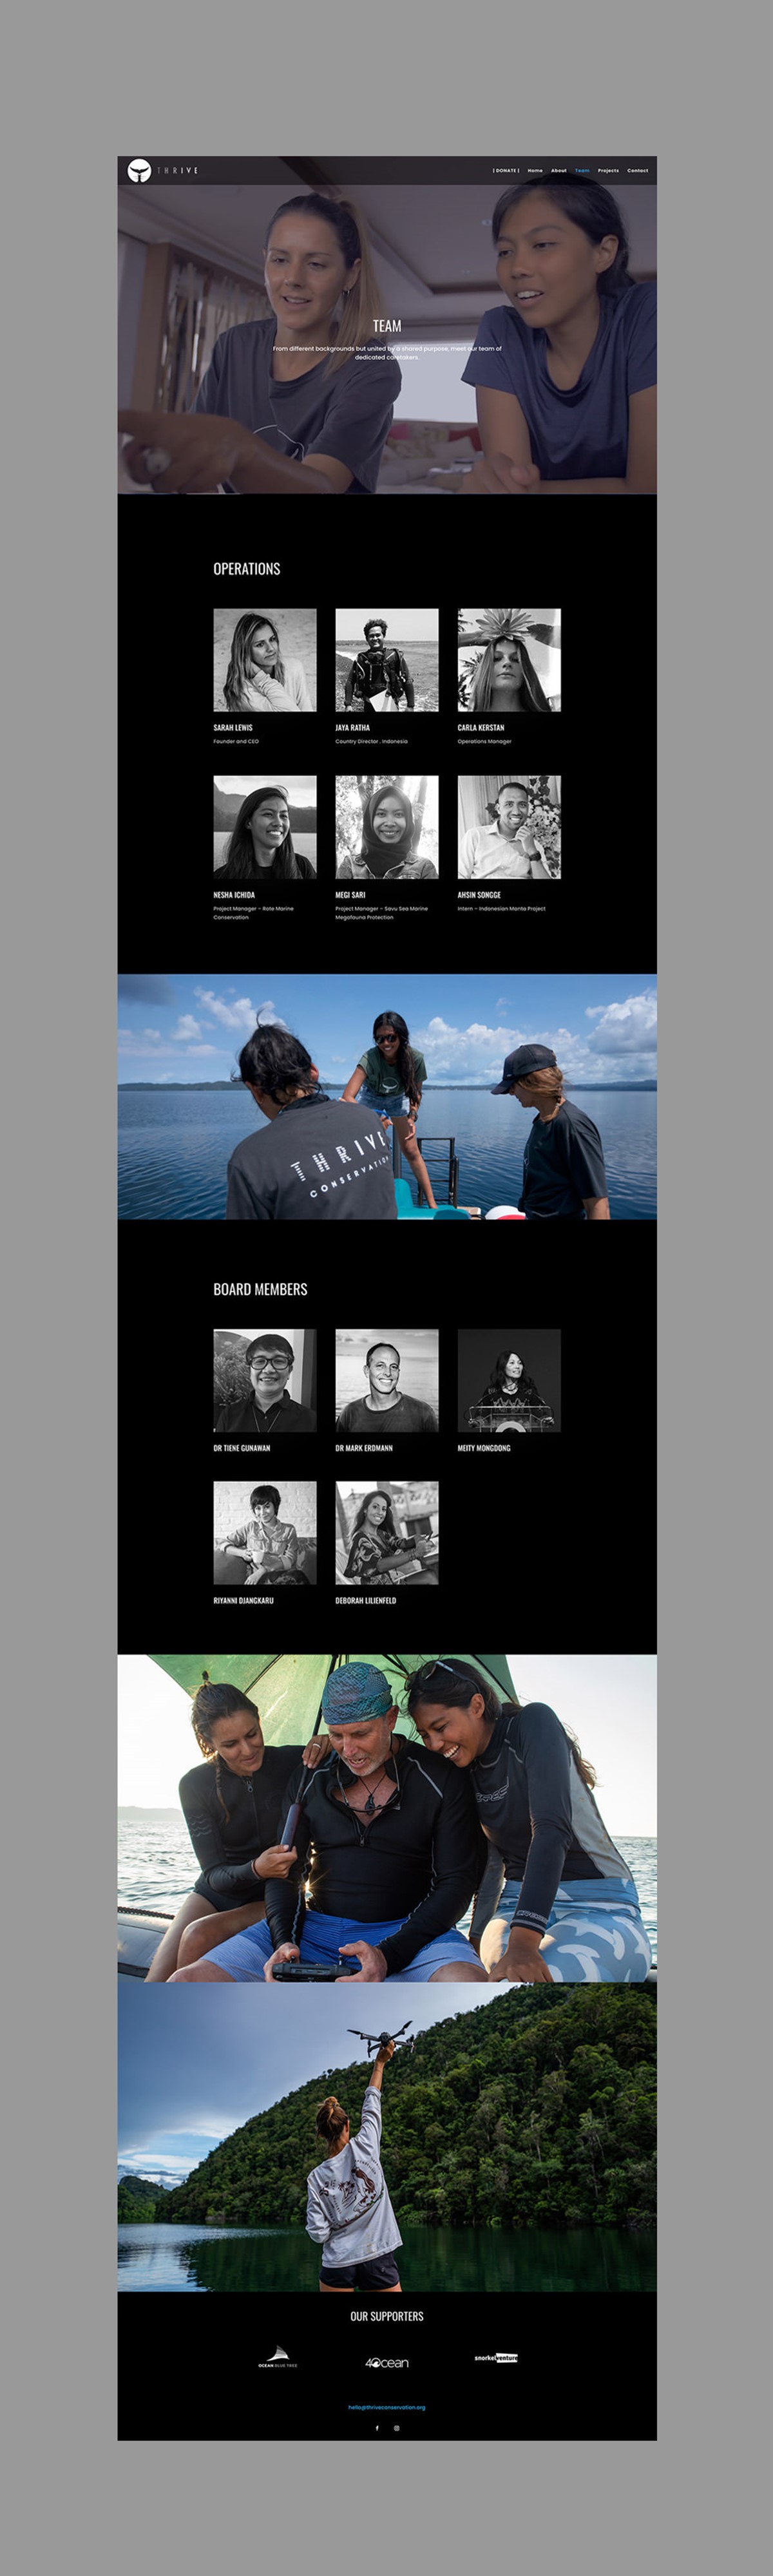 Thrive Conservation. Website. Team page. Website design by Superfried.